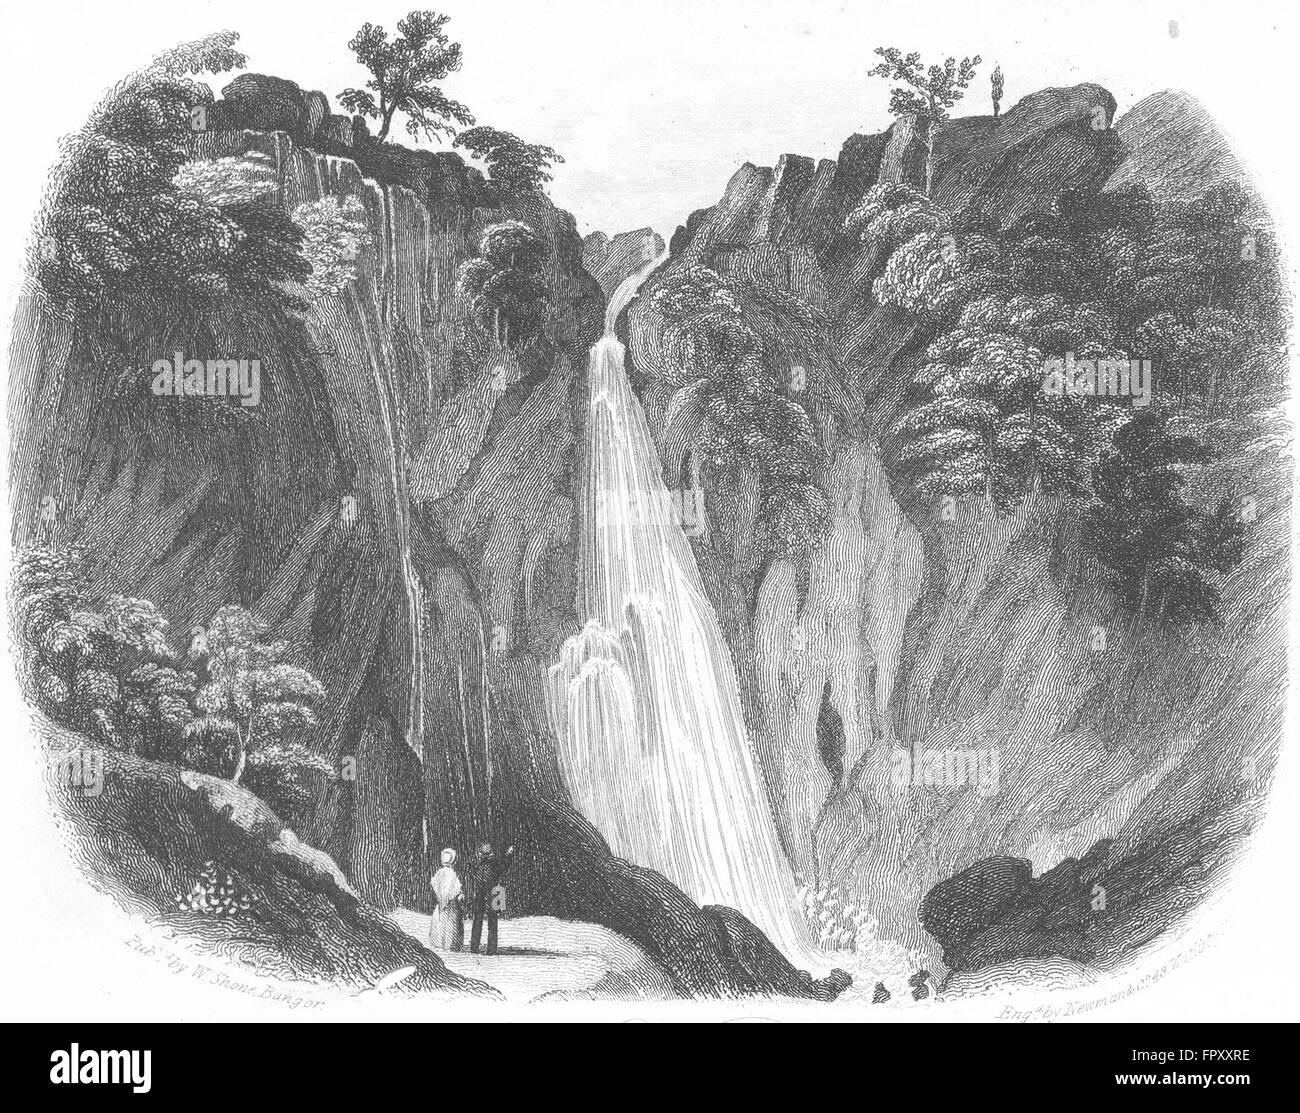 WALES: Aber Waterfall: Shone, antique print 1850 Stock Photo